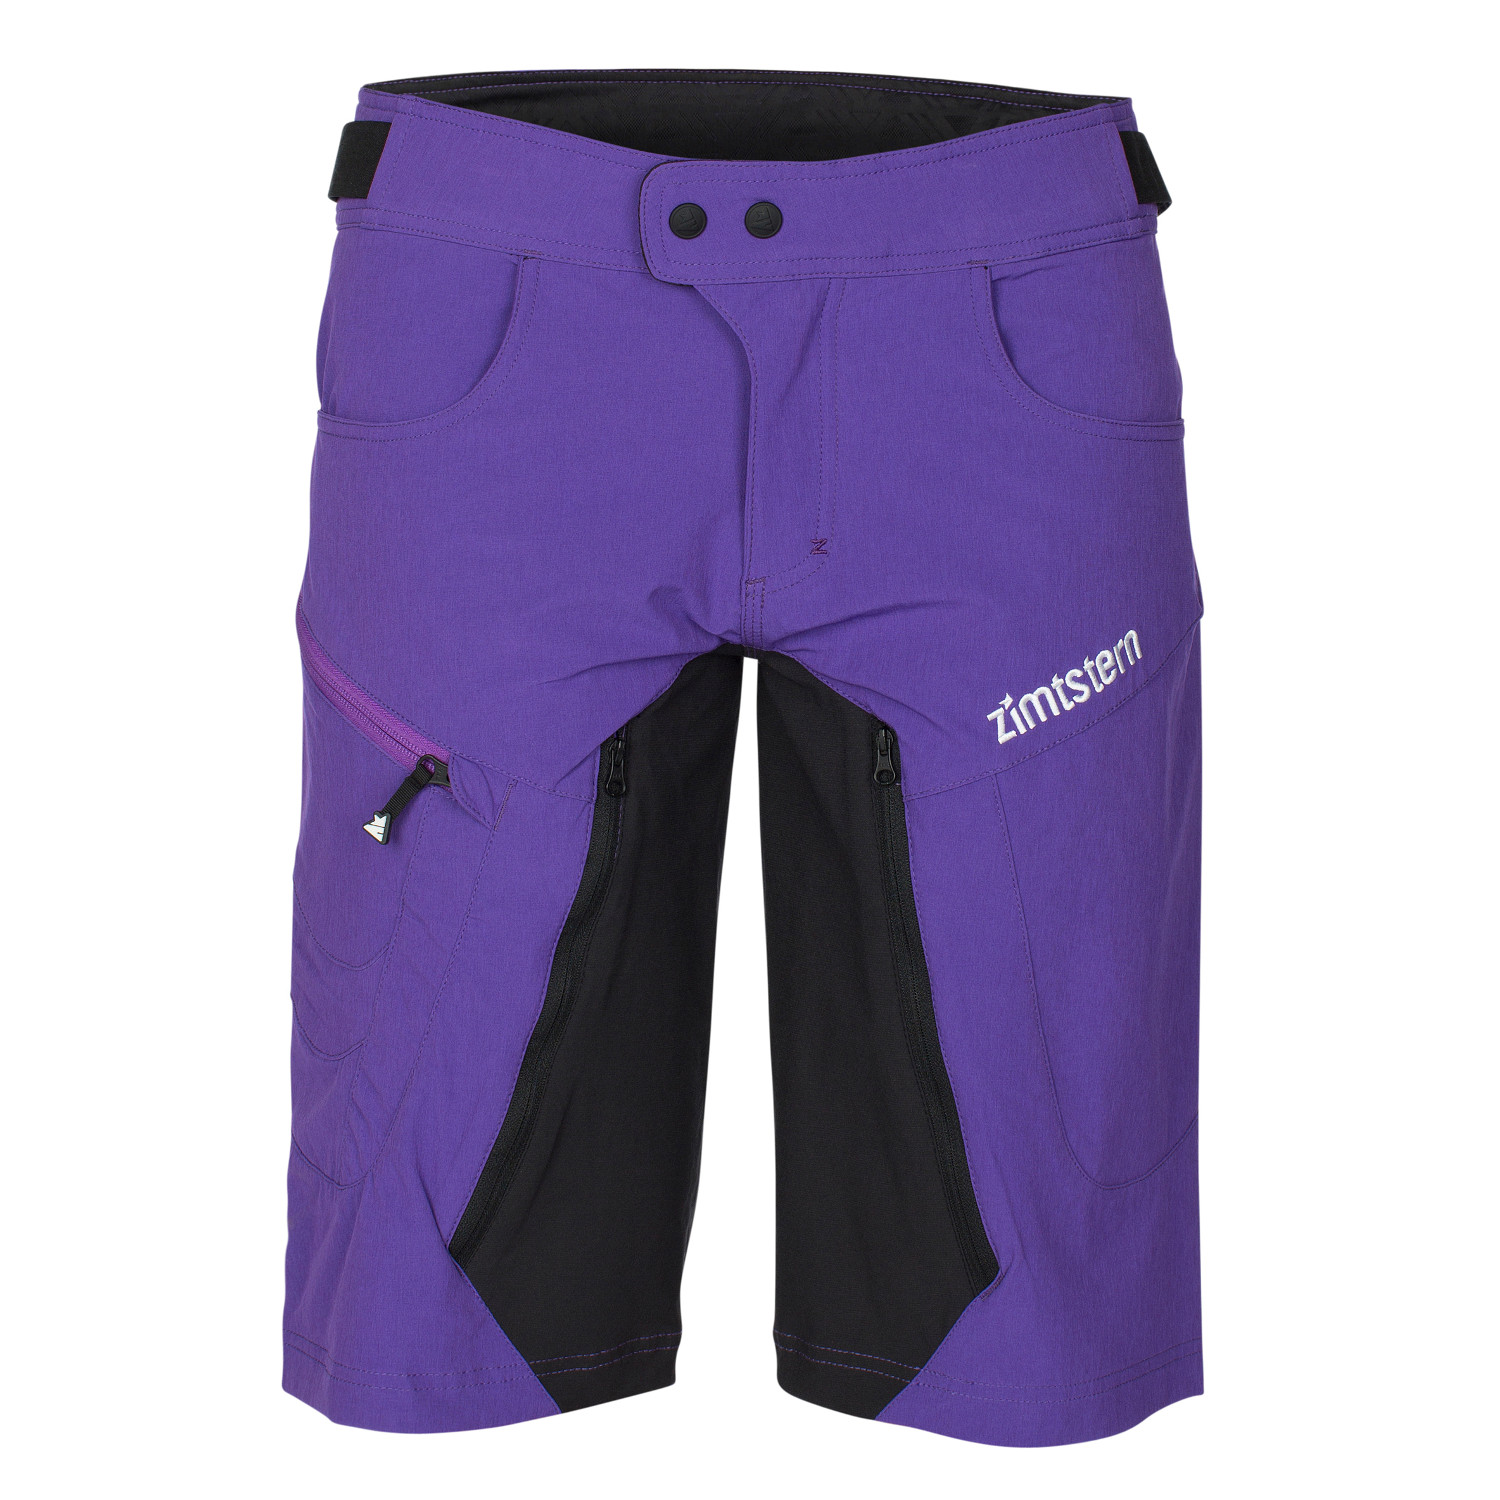 Zimtstern Girls Bike Shorts Taila Purple